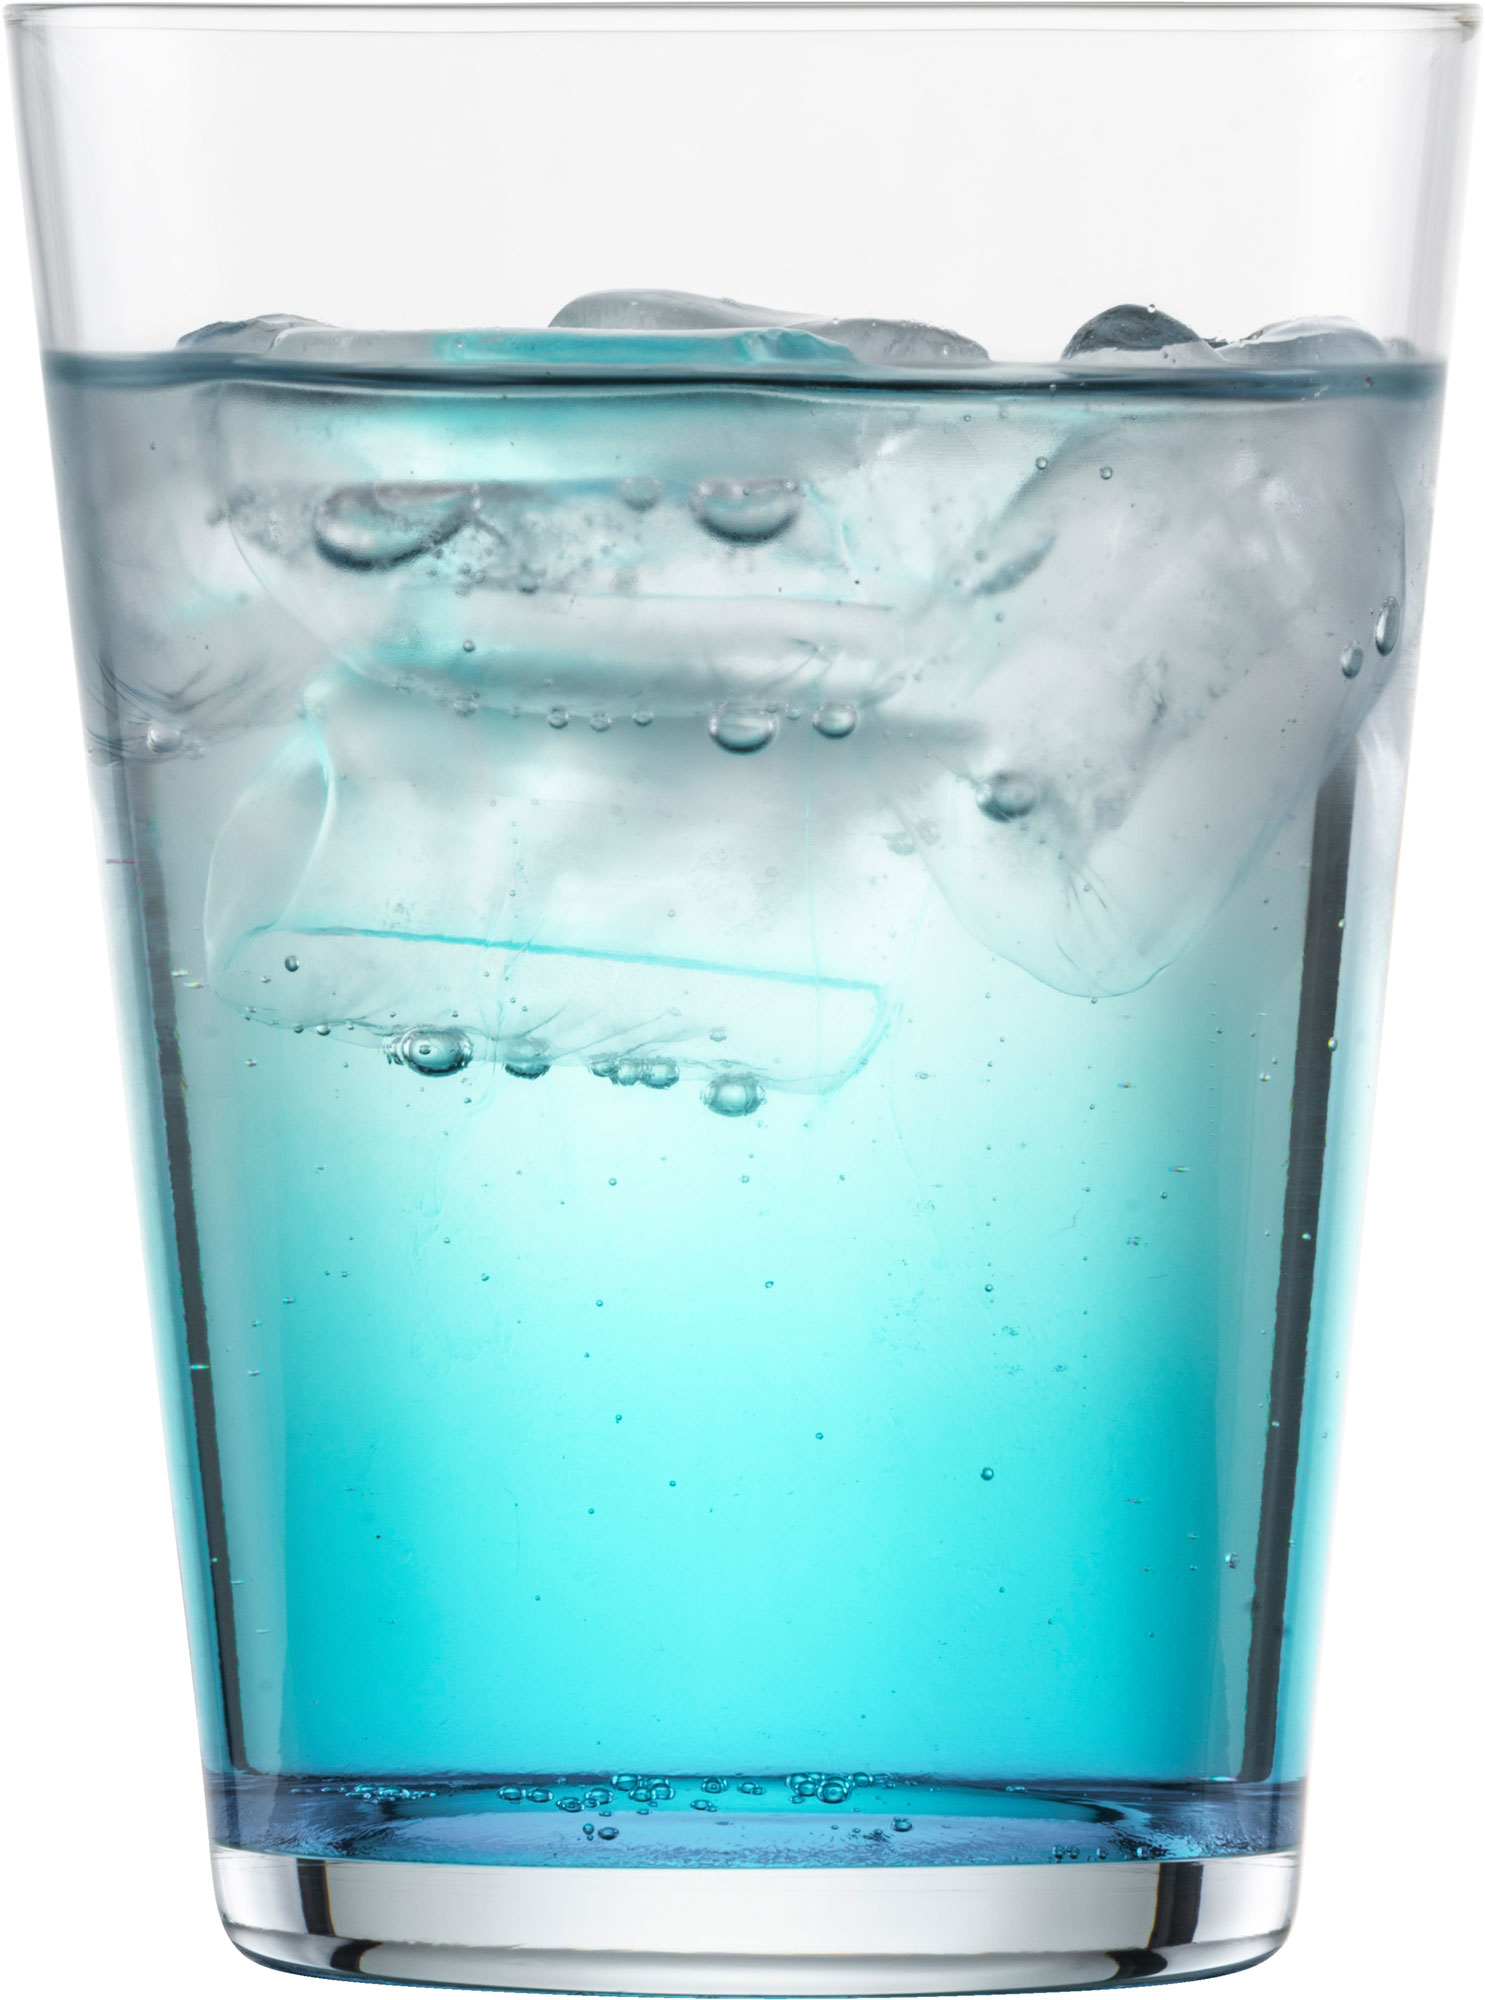 Water glass Sonido crystal, Zwiesel Glas - 548ml (1 pc.)